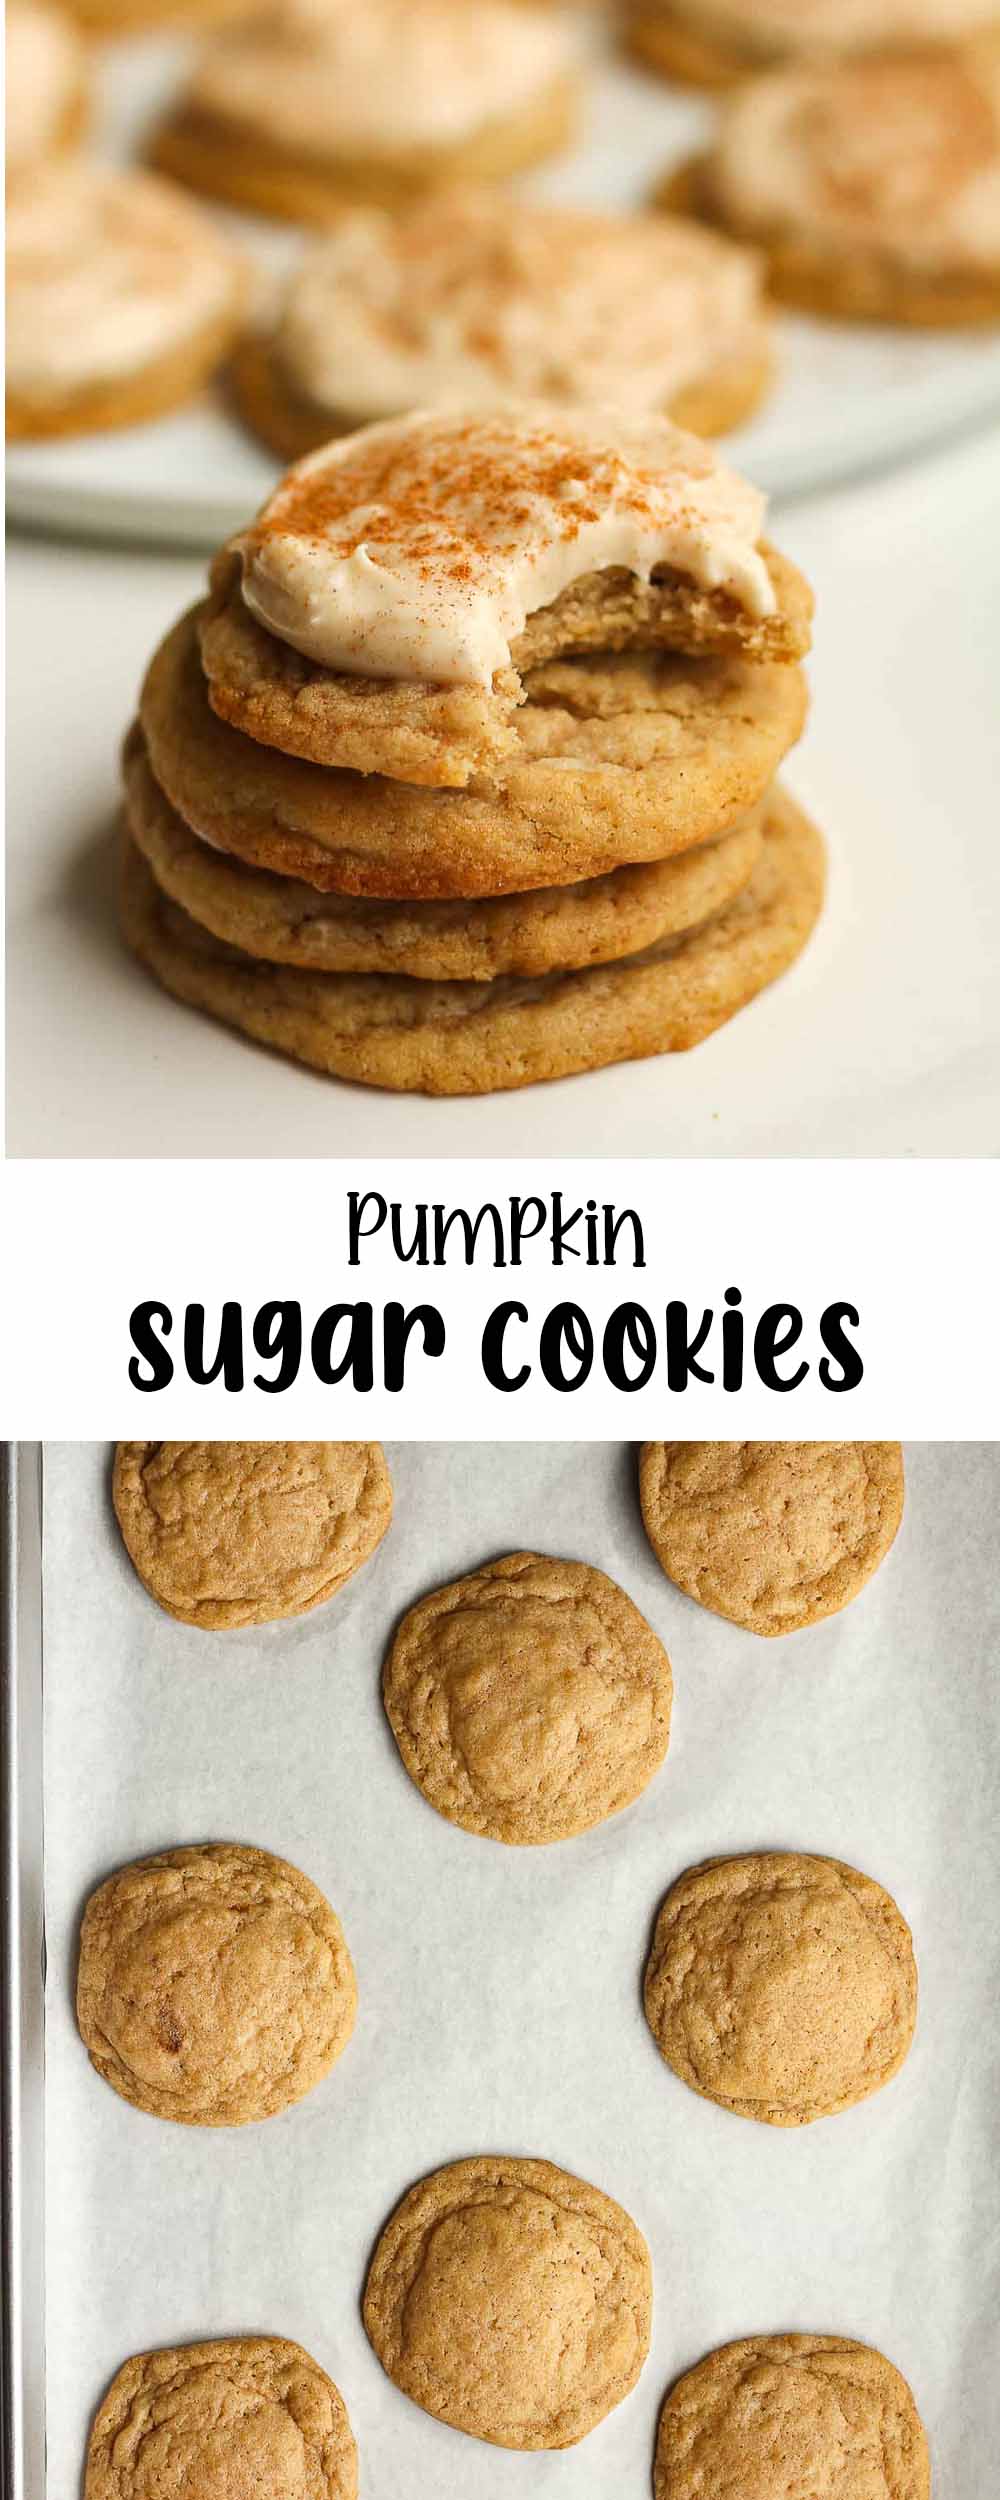 Two photos of pumpkin sugar cookies.